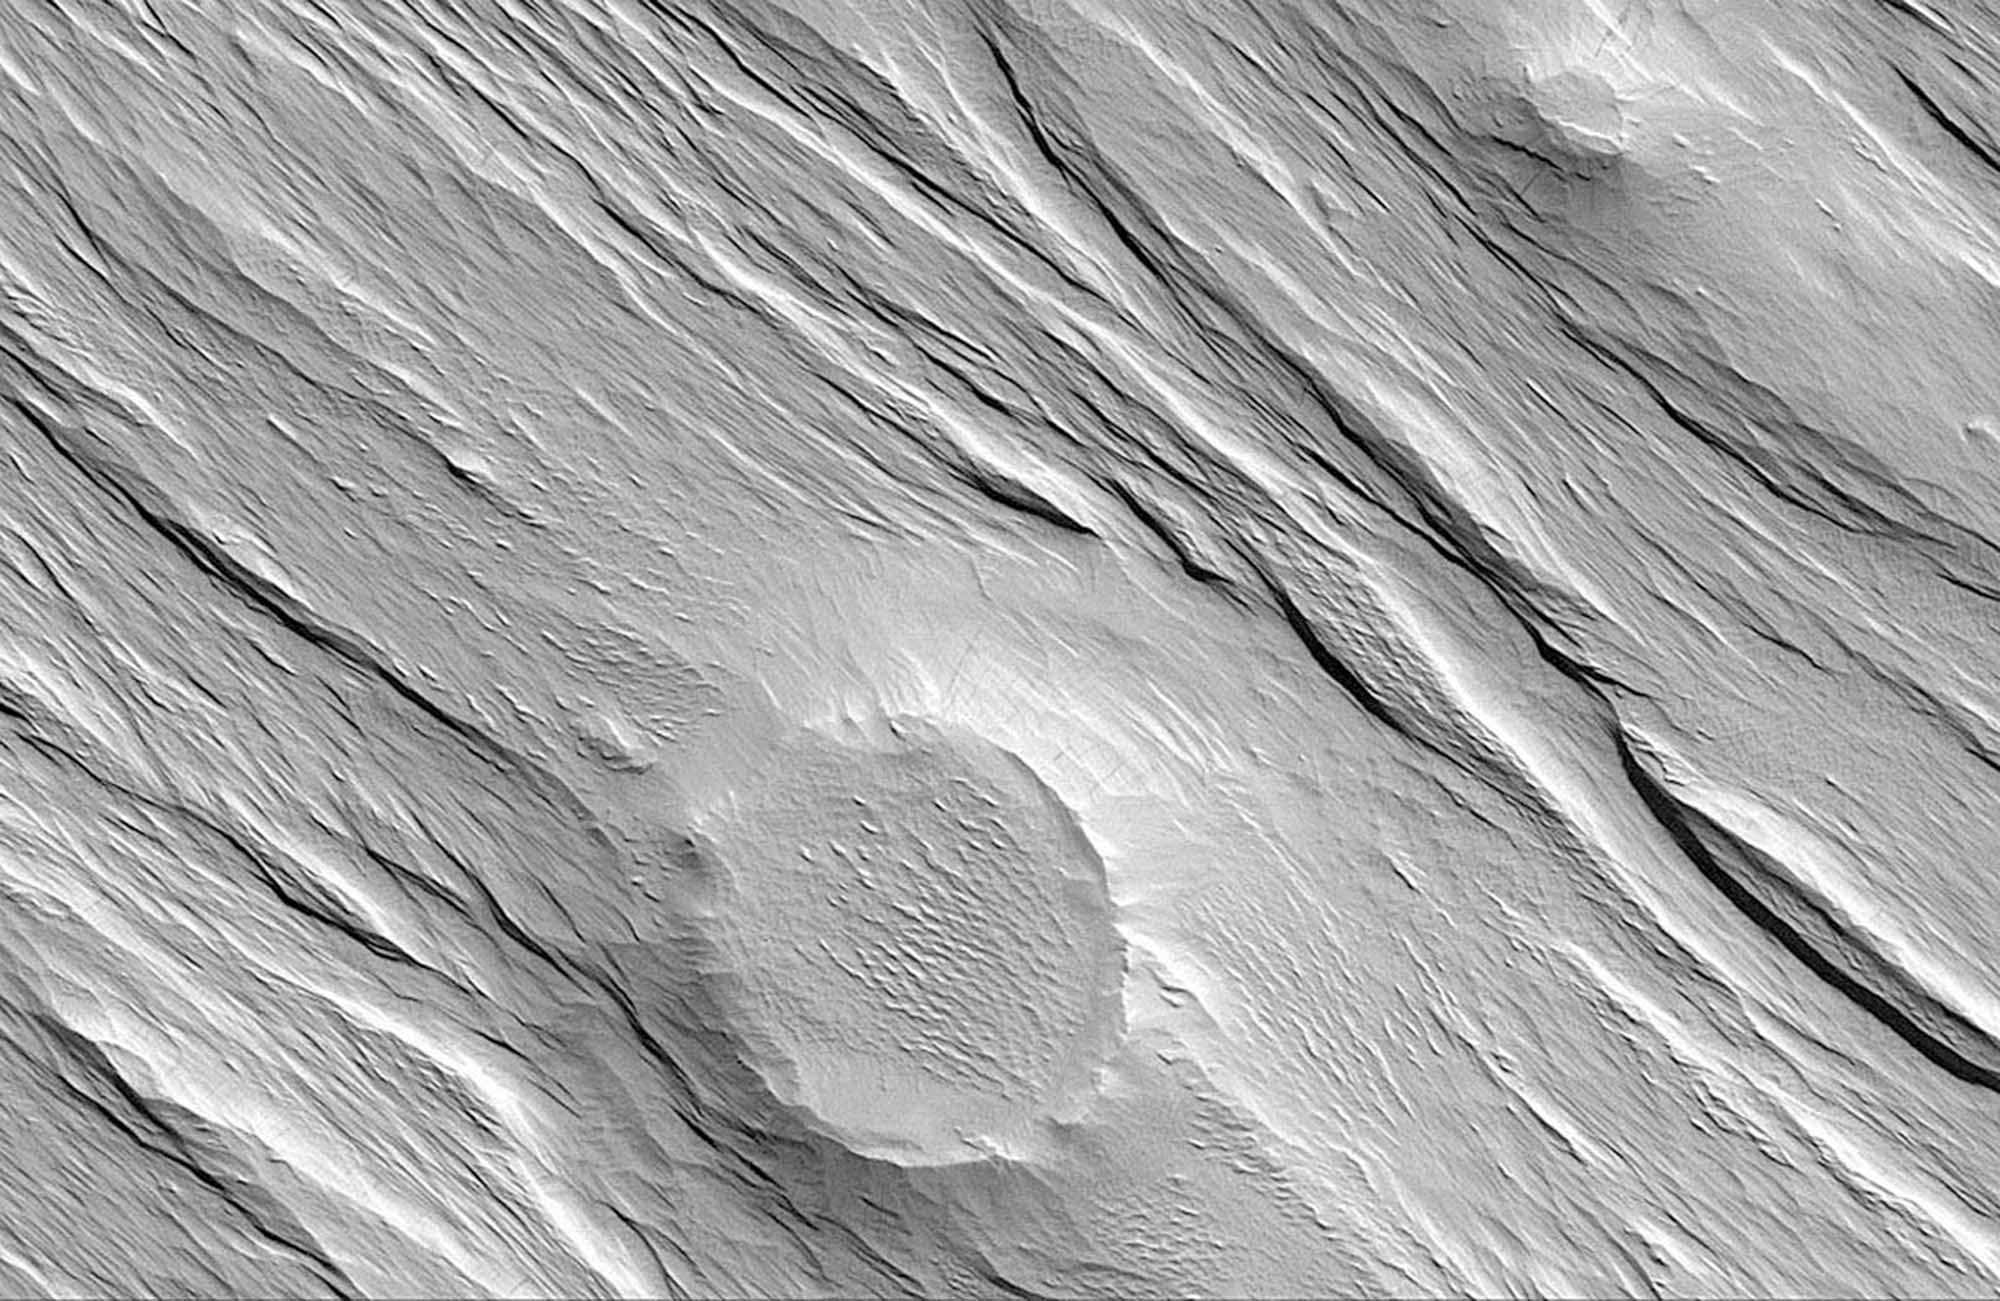 Memnonia Sulci region of Mars